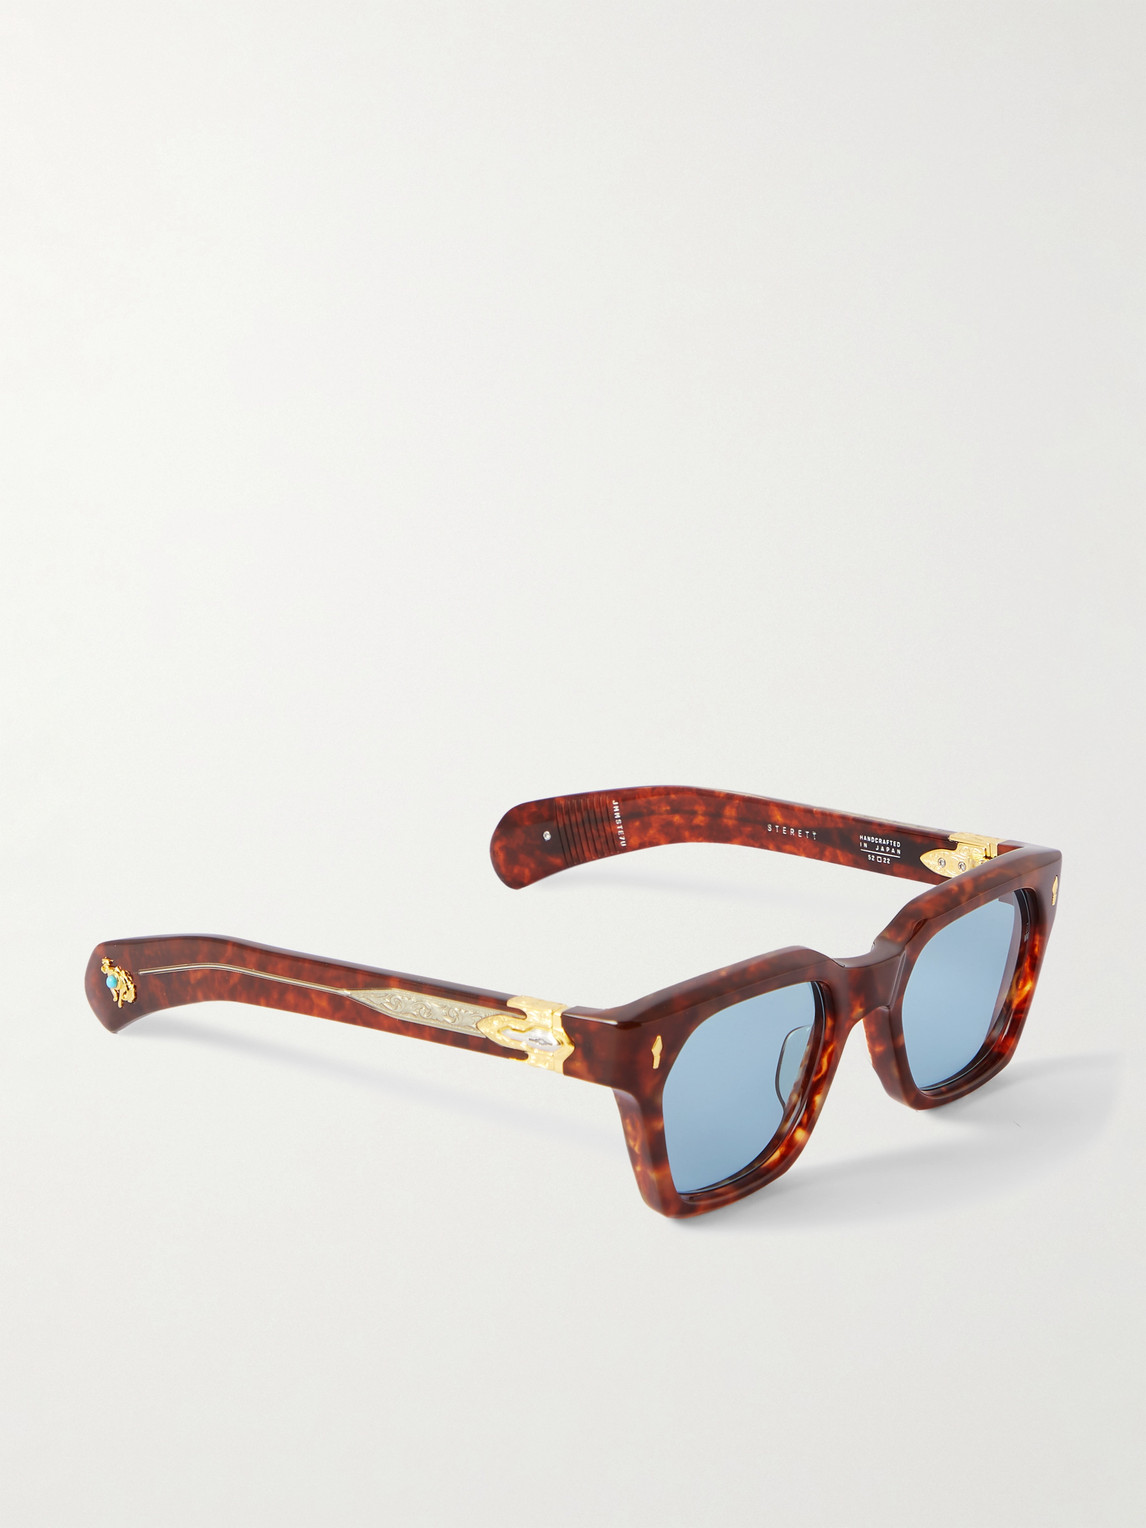 Shop Jacques Marie Mage Sterett D-frame Tortoiseshell Acetate Sunglasses In Brown